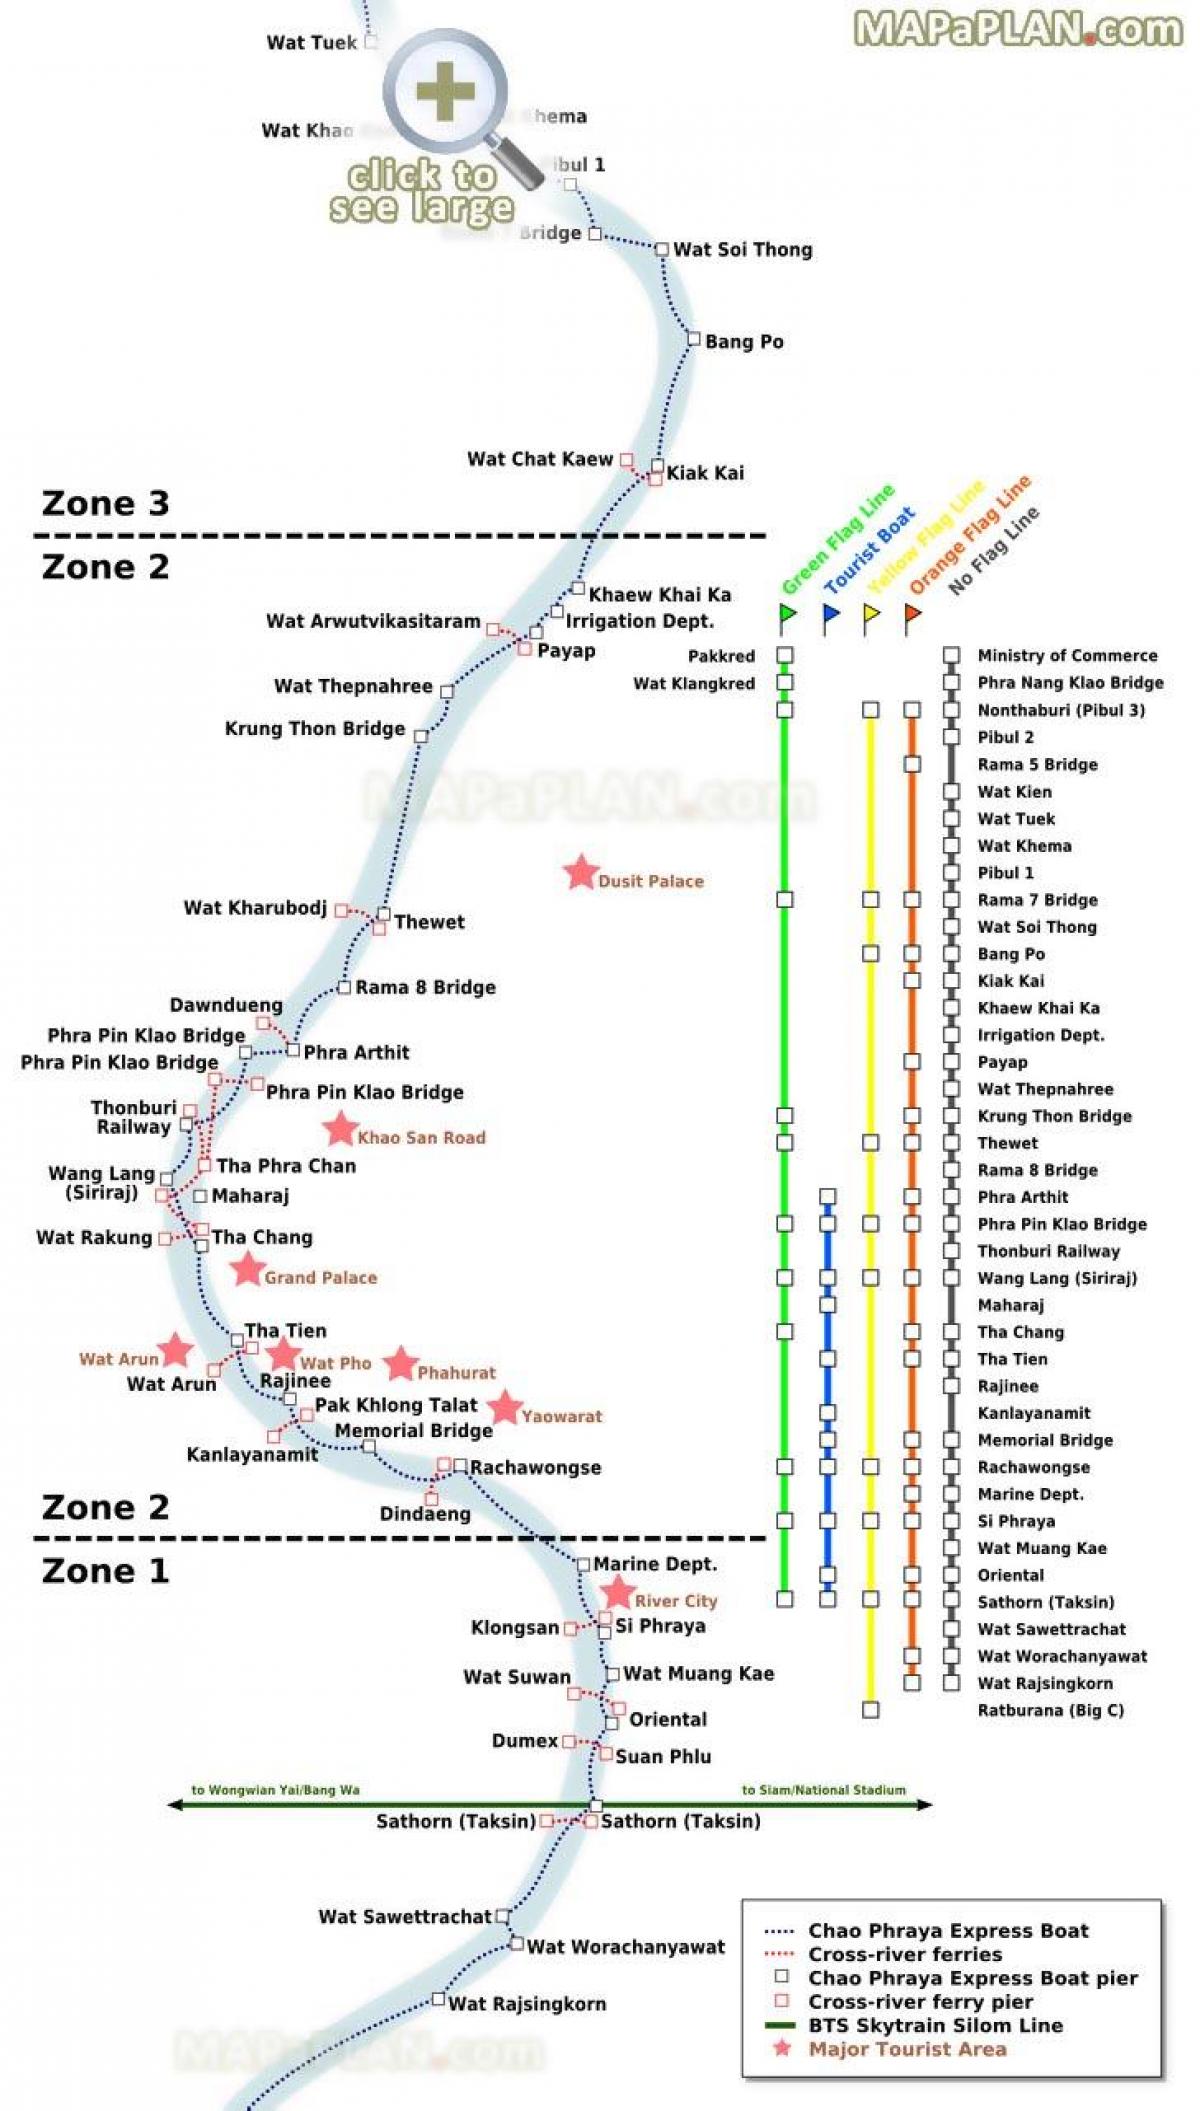 bangkok nehir feribot haritası